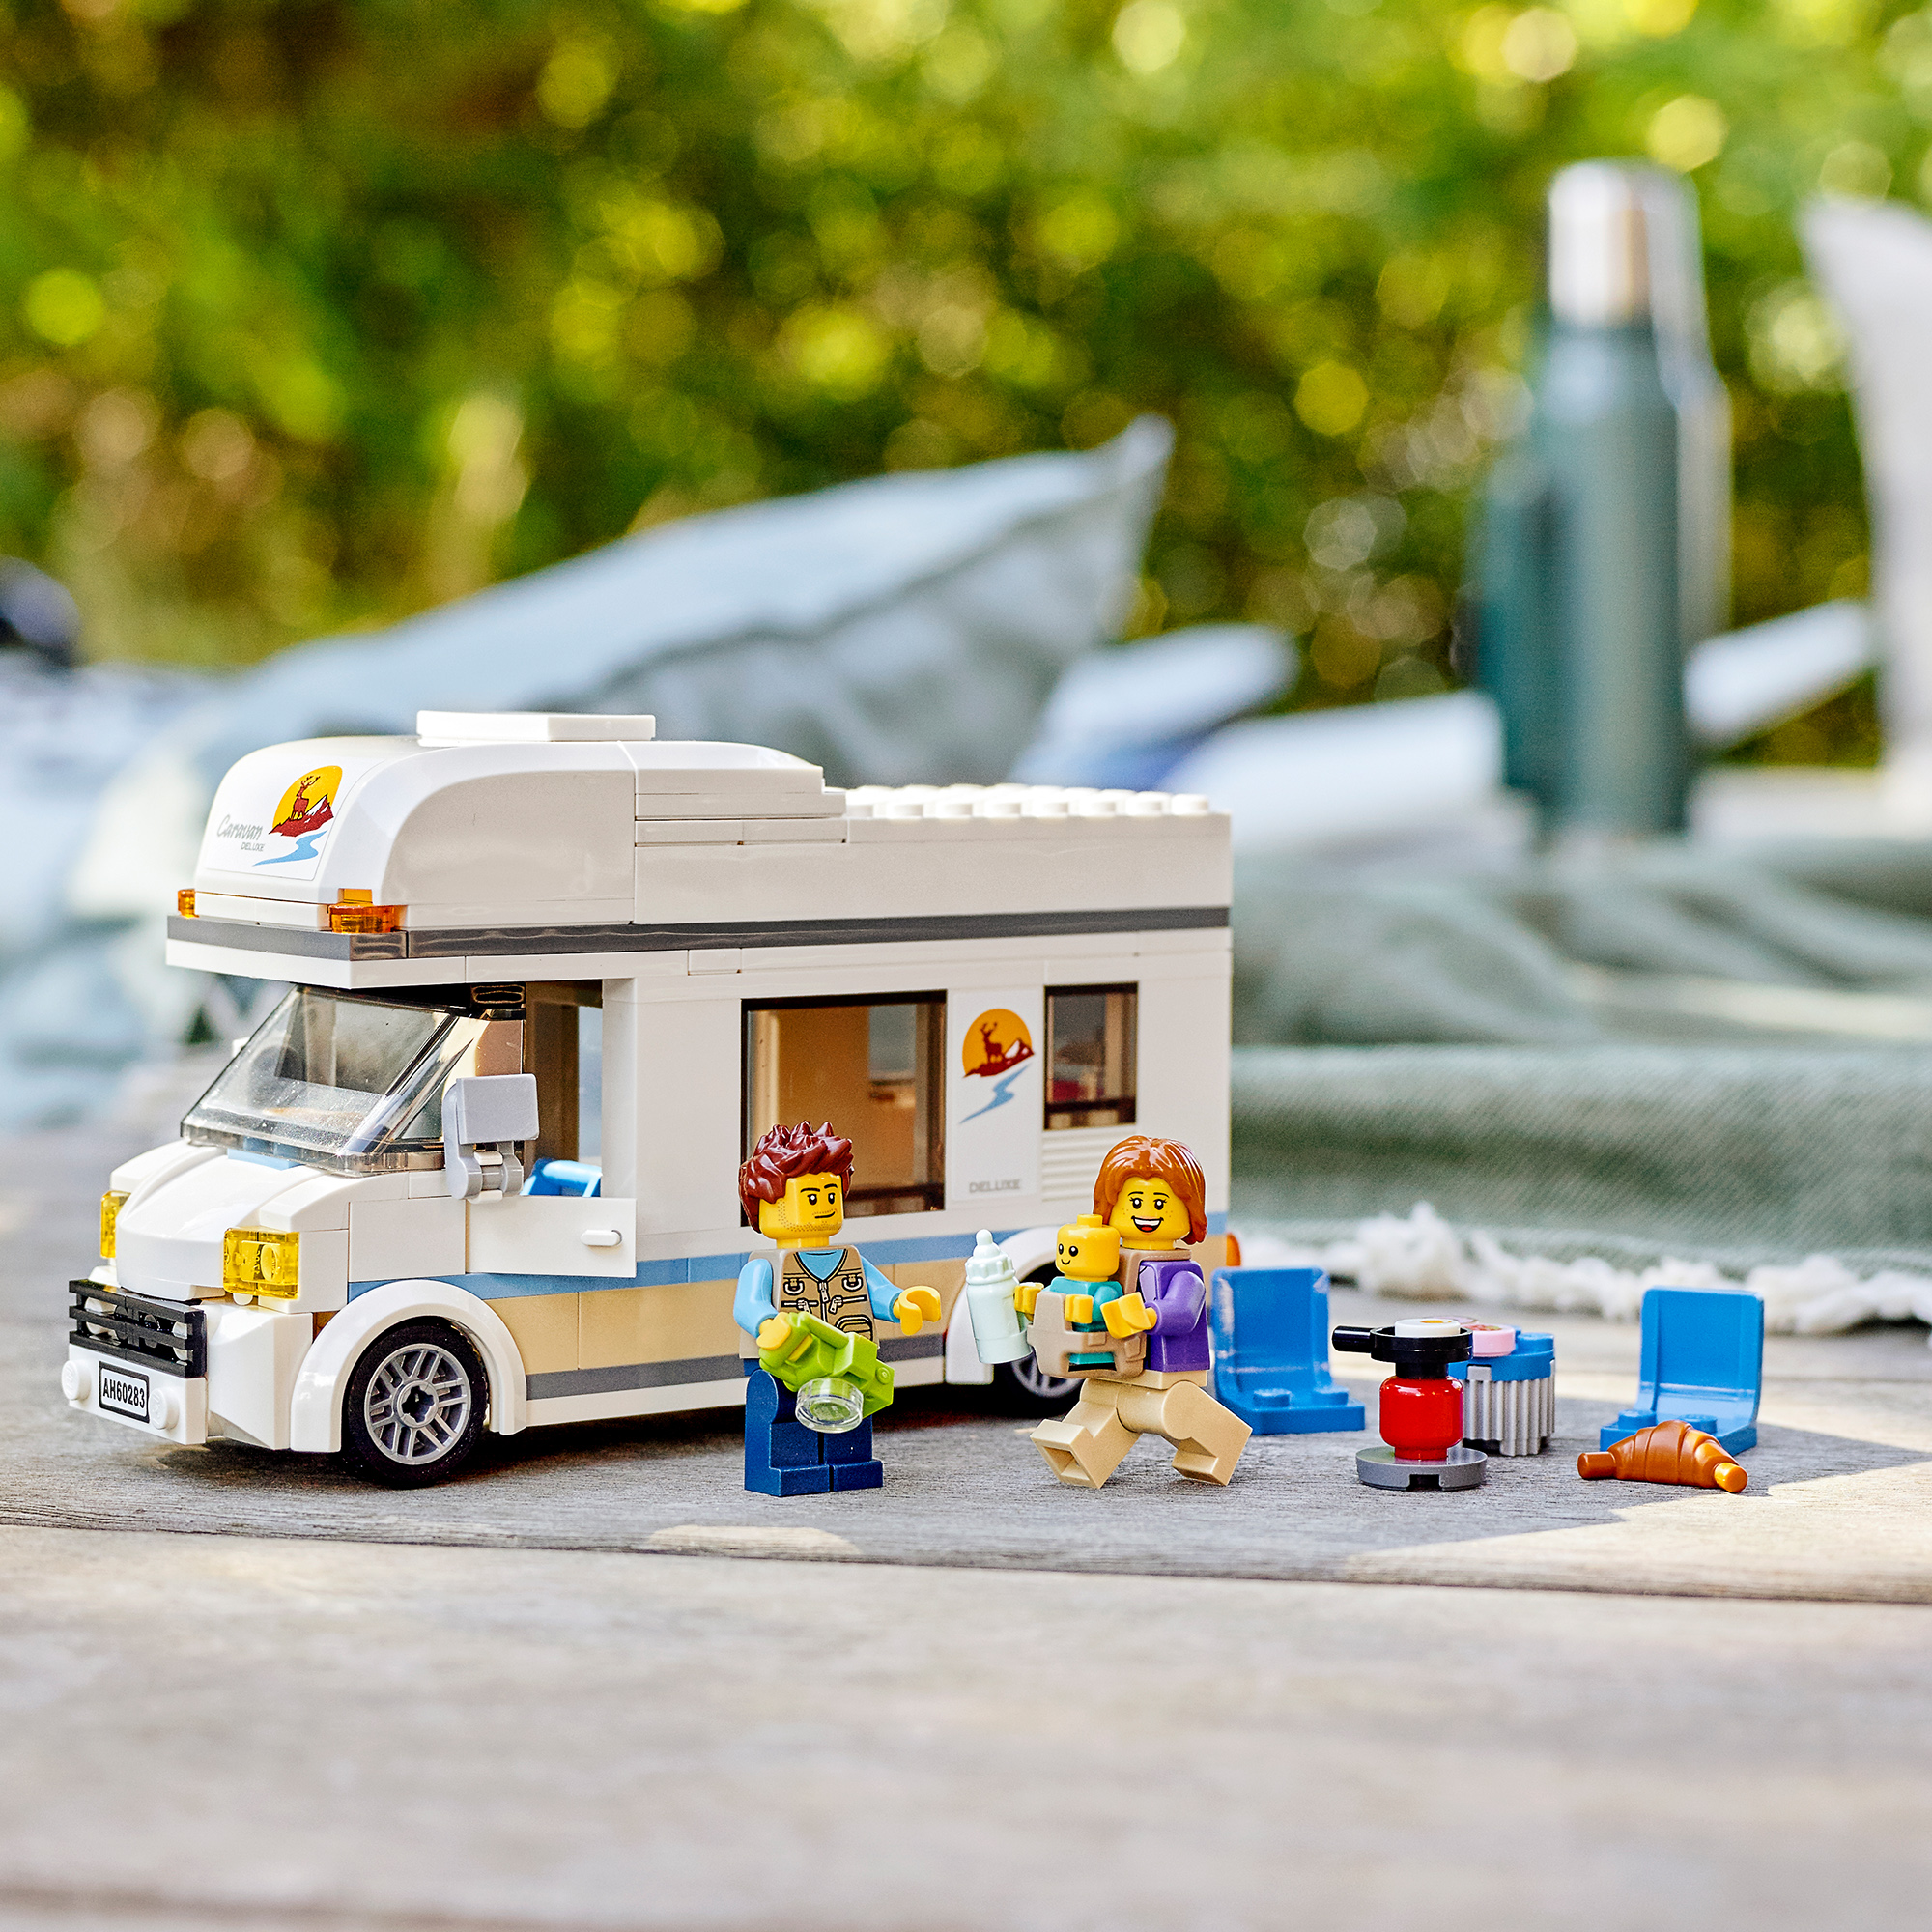 LEGO City Bausatz, Mehrfarbig 60283 Ferien-Wohnmobil